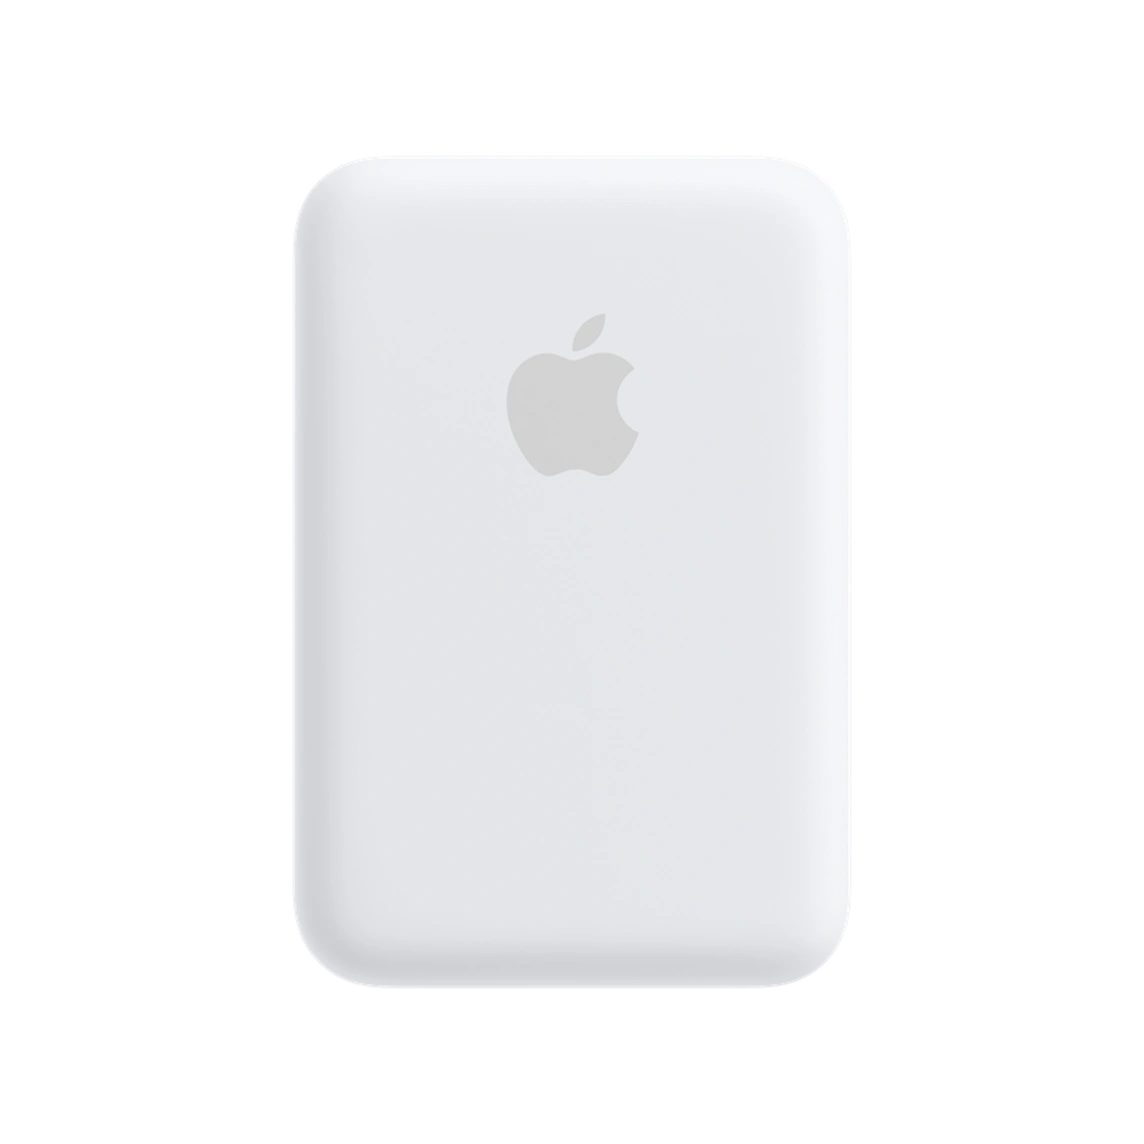 Apple iPhone 13 Mini 256GB